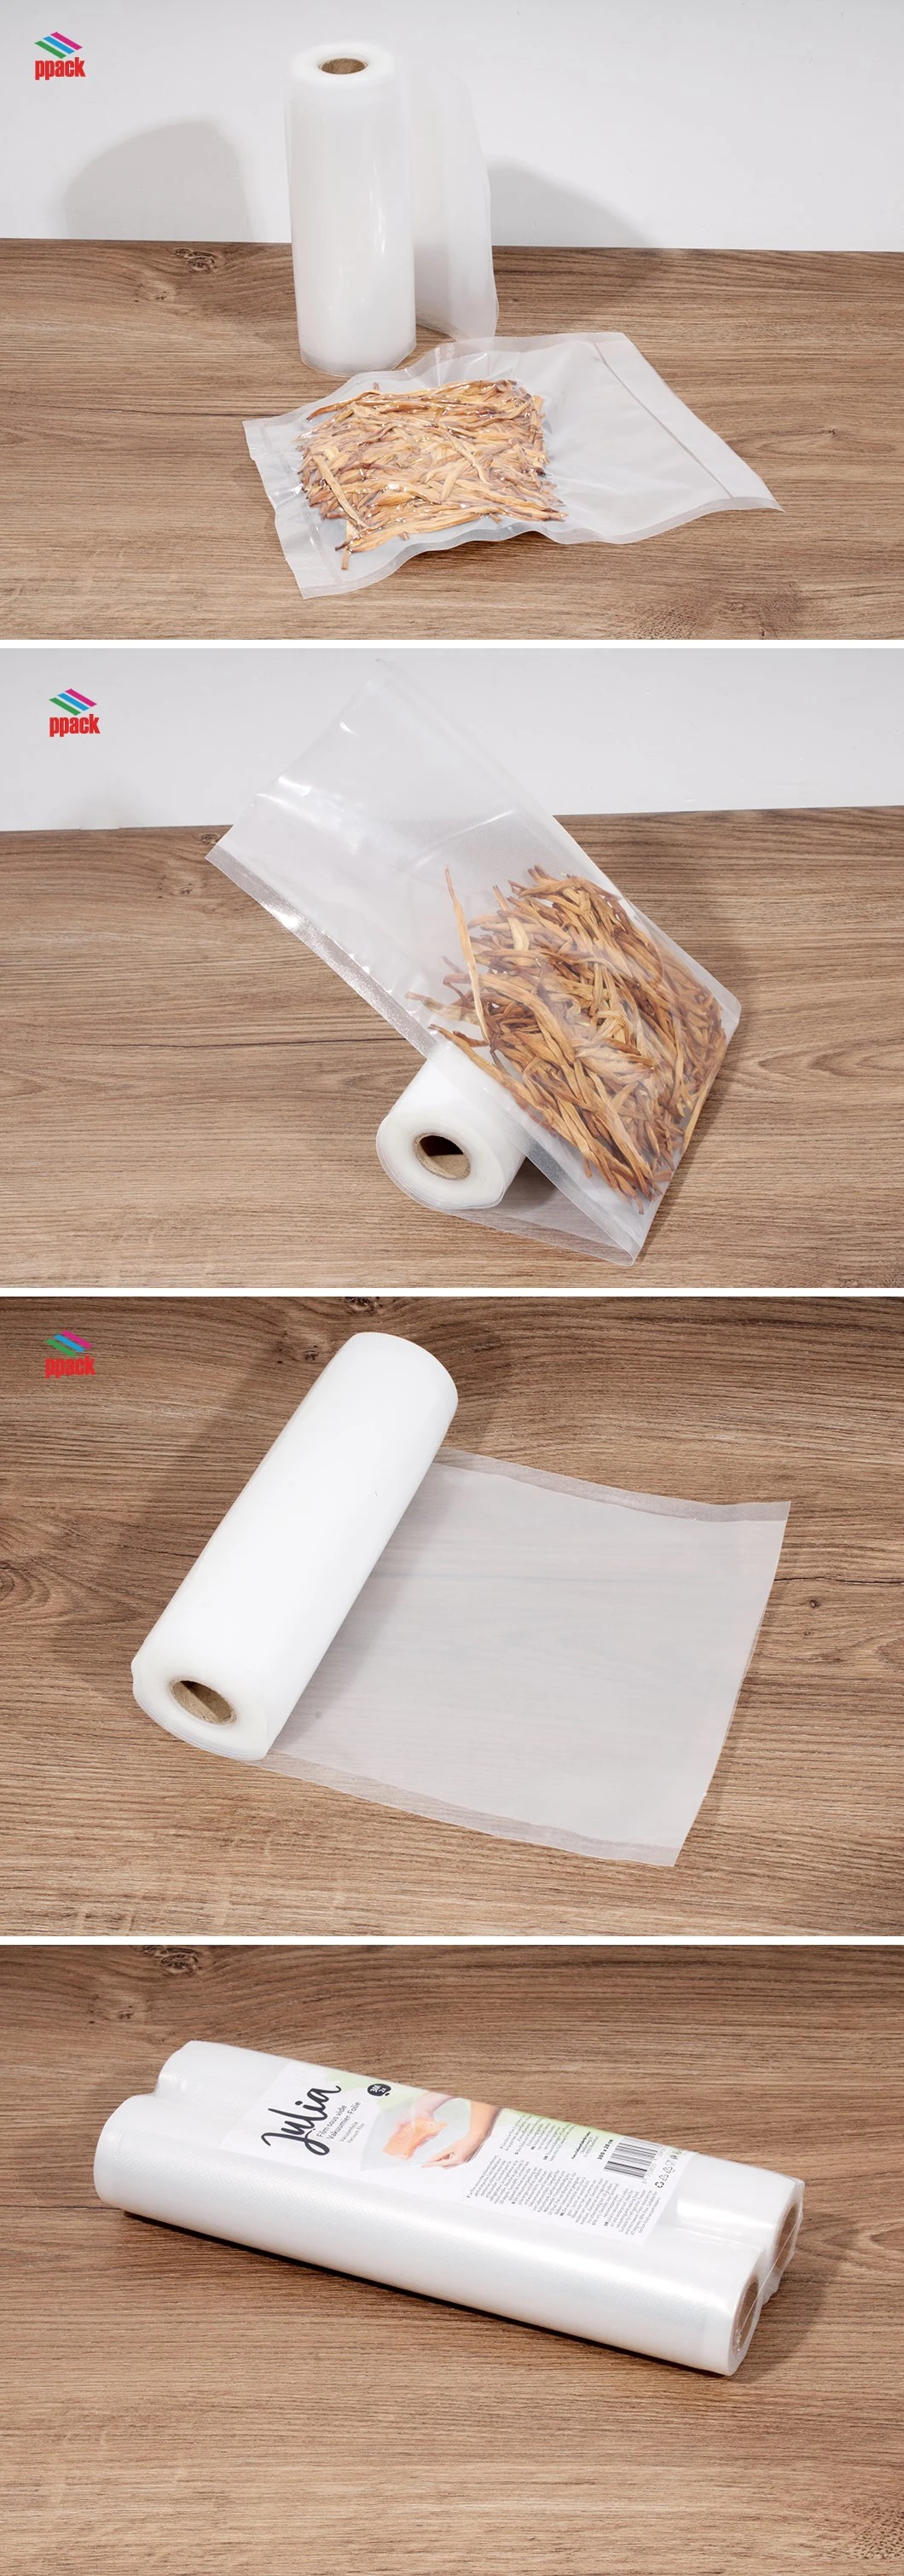 Sample Free! Embossed Vacuum Bag Roll Textured Vacuum Storage Bag Roll for Food Sealer Plastic Packaging Made in China Manufacture